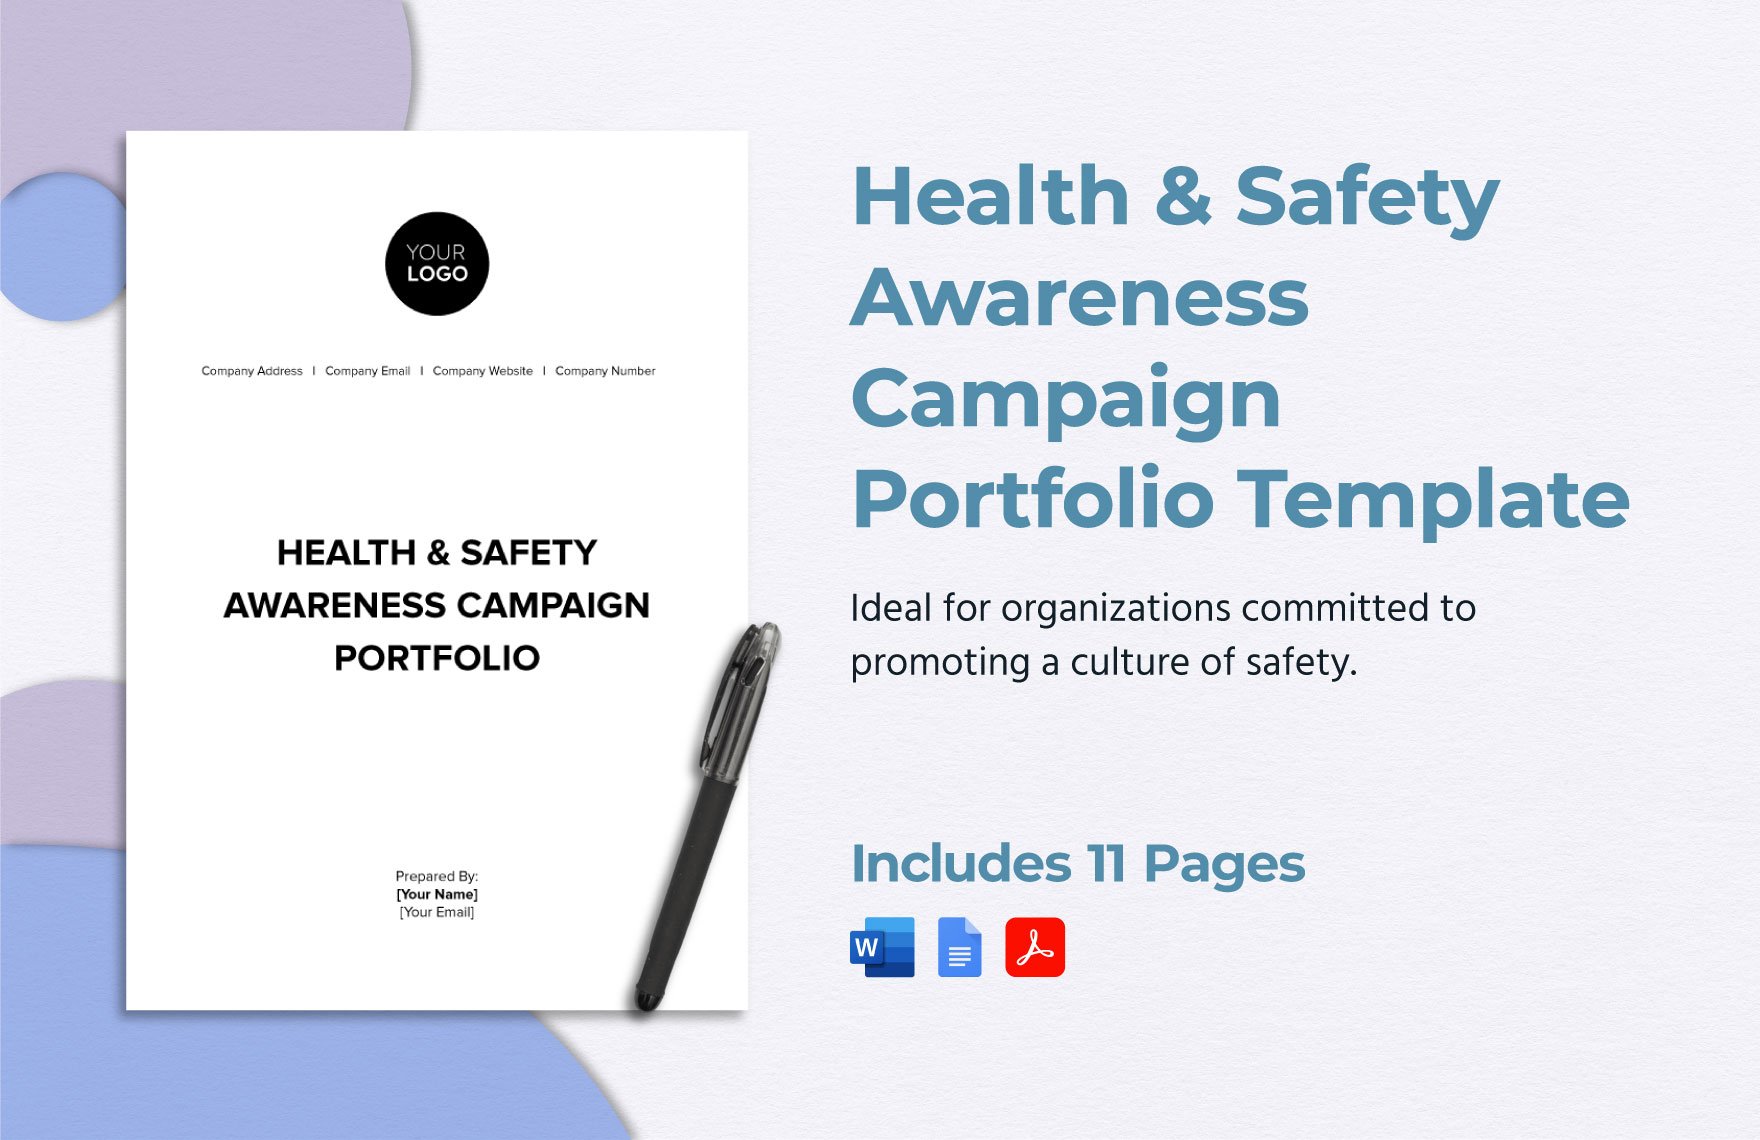 Health & Safety Awareness Campaign Portfolio Template